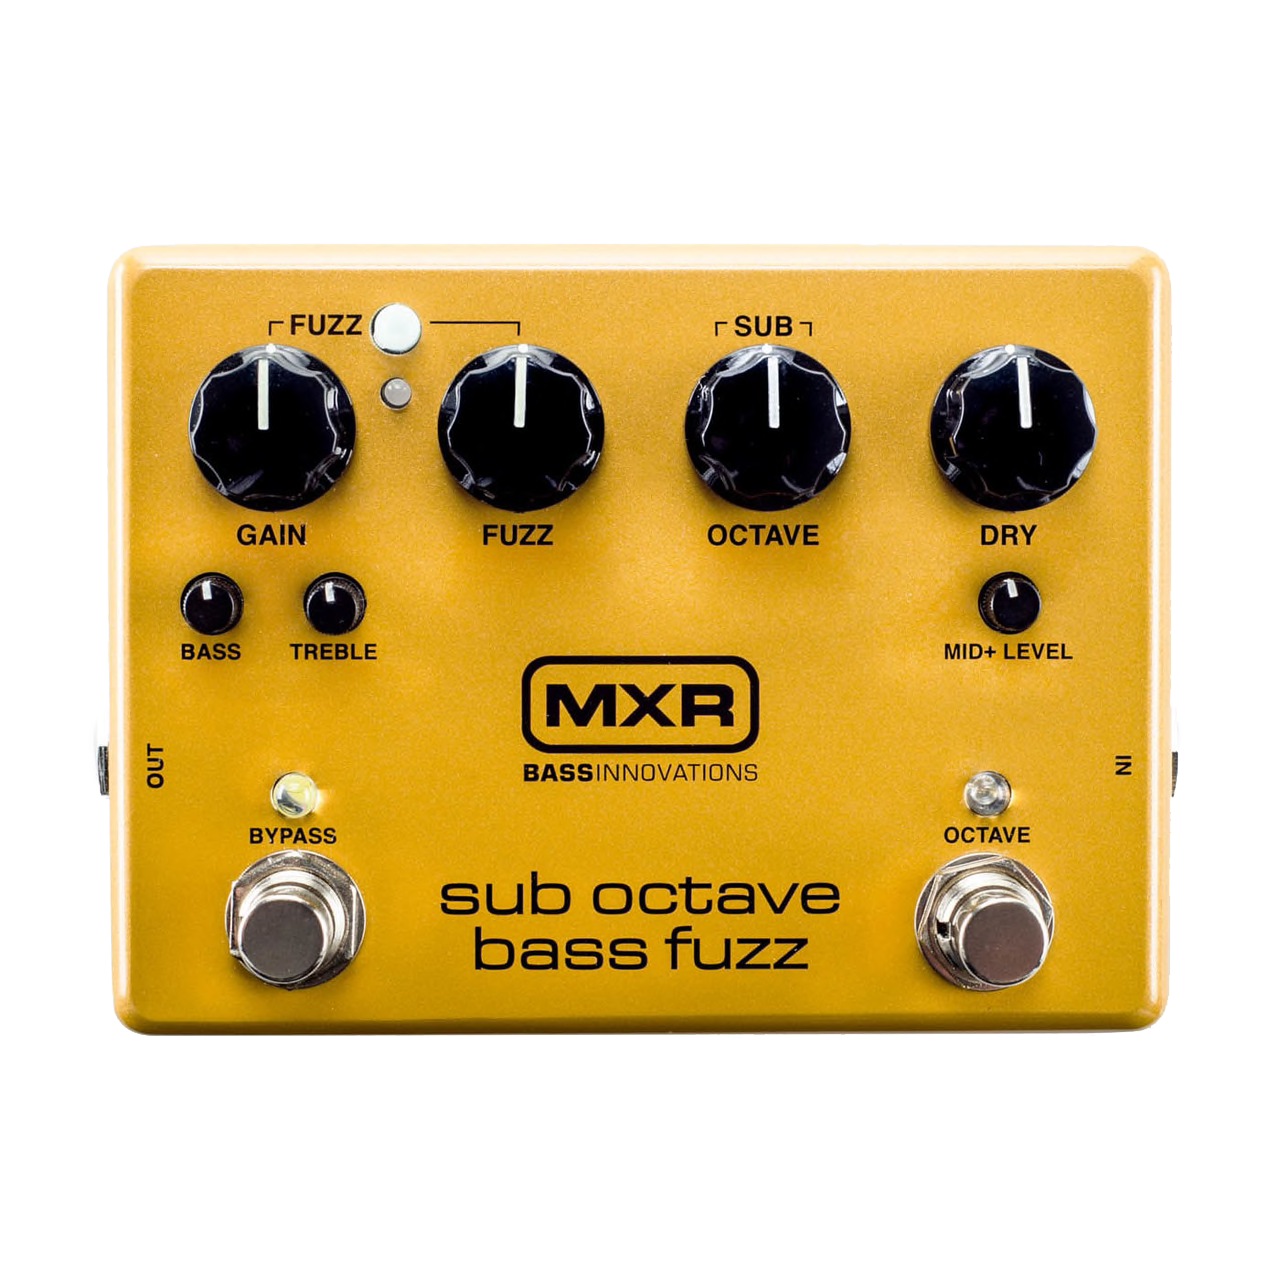 Top down of MXR M287 Sub Octave Bass Fuzz.